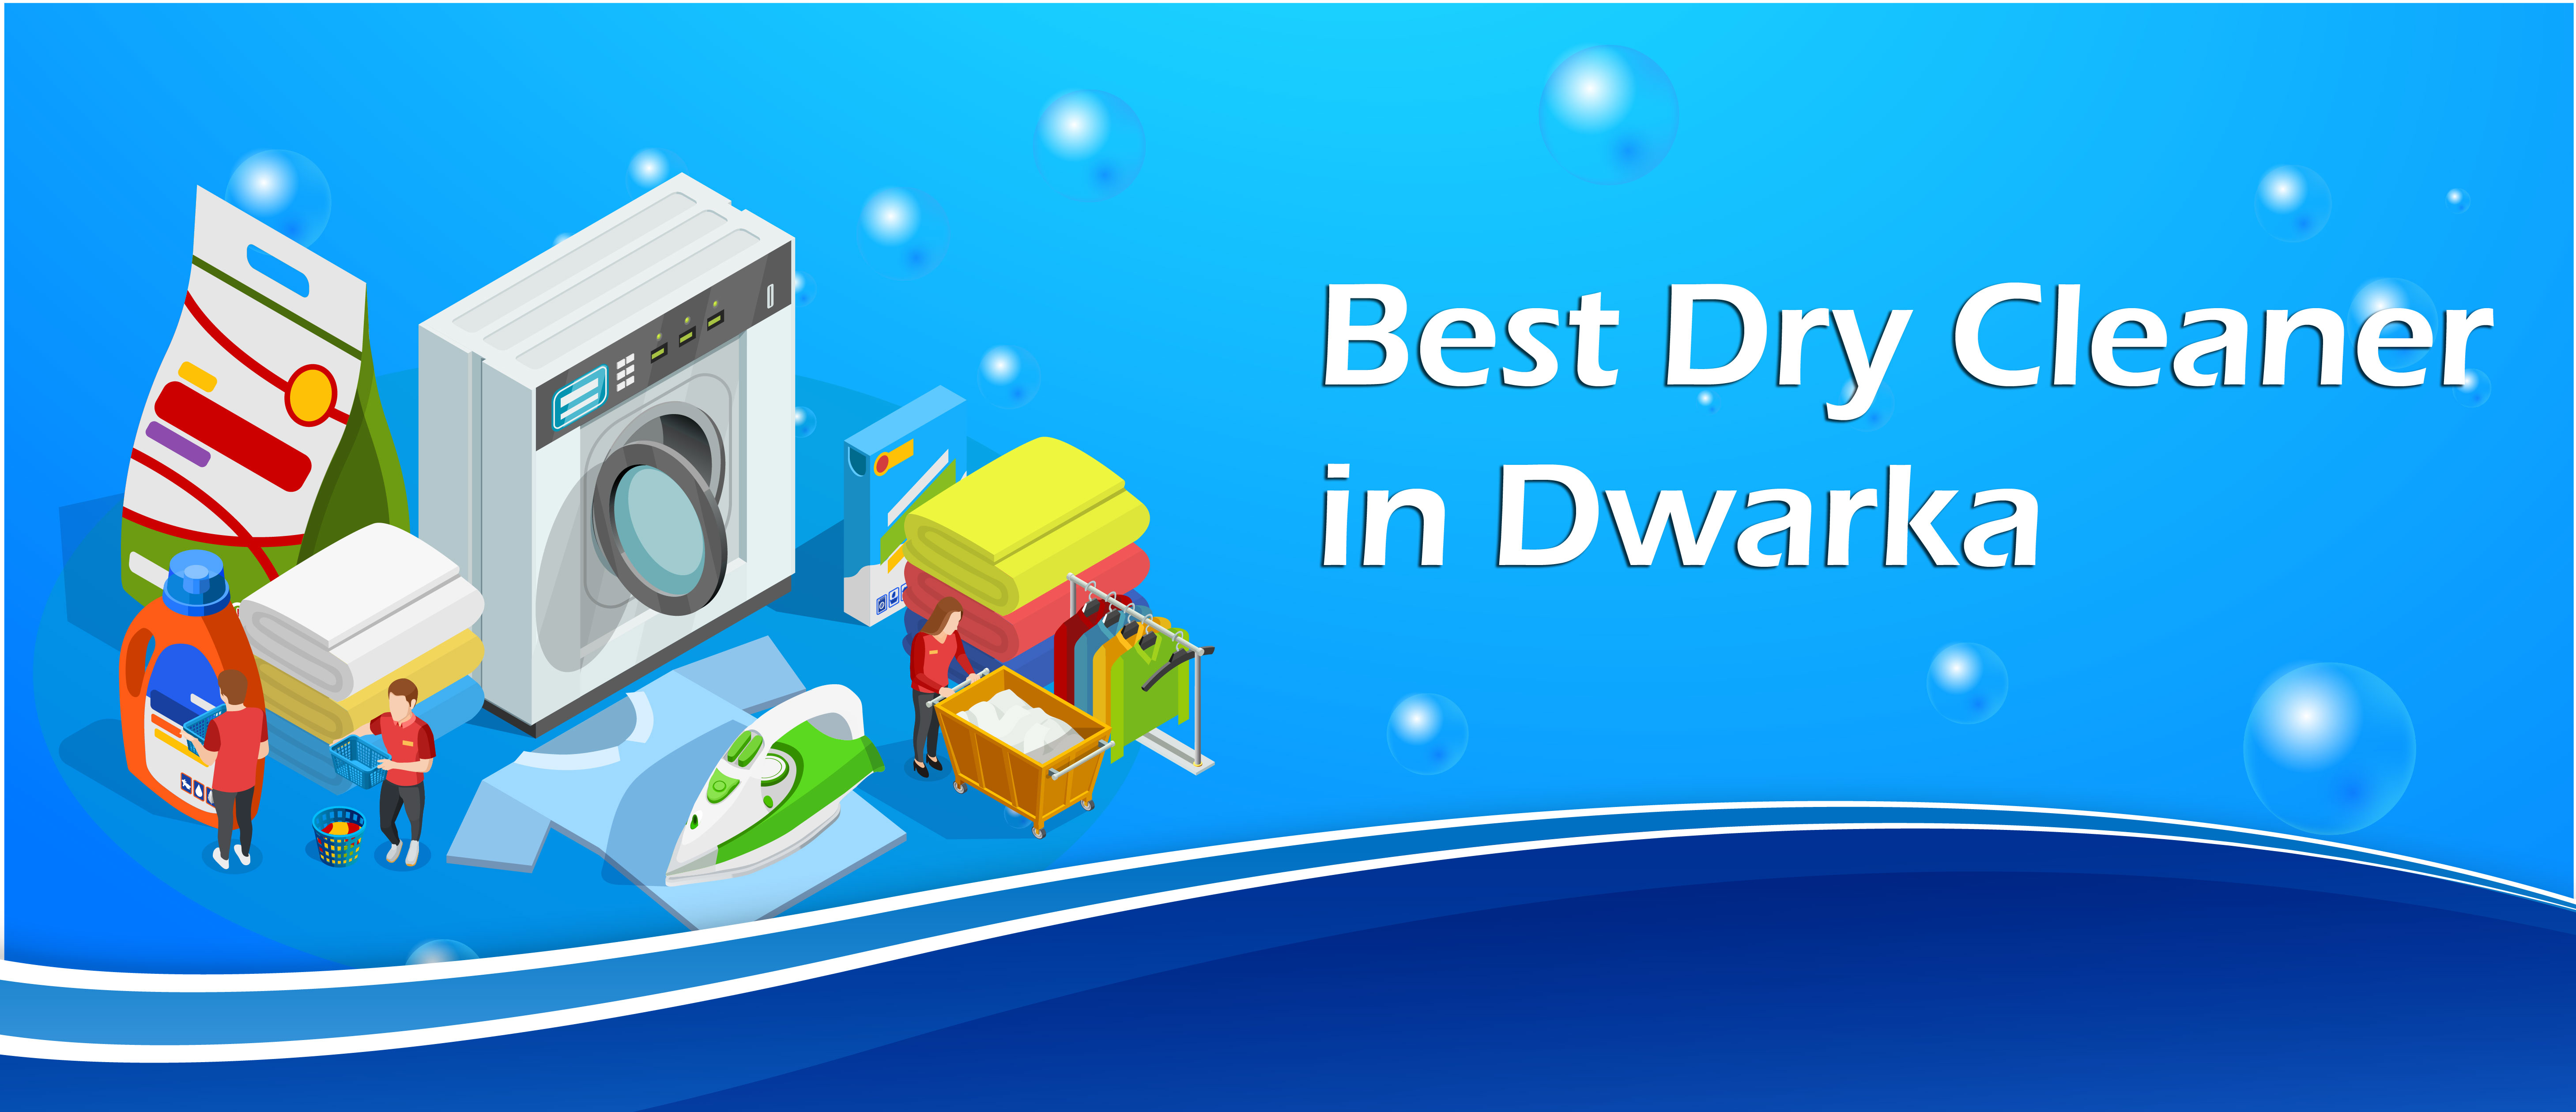 Best Dry Cleaner in Dwarka